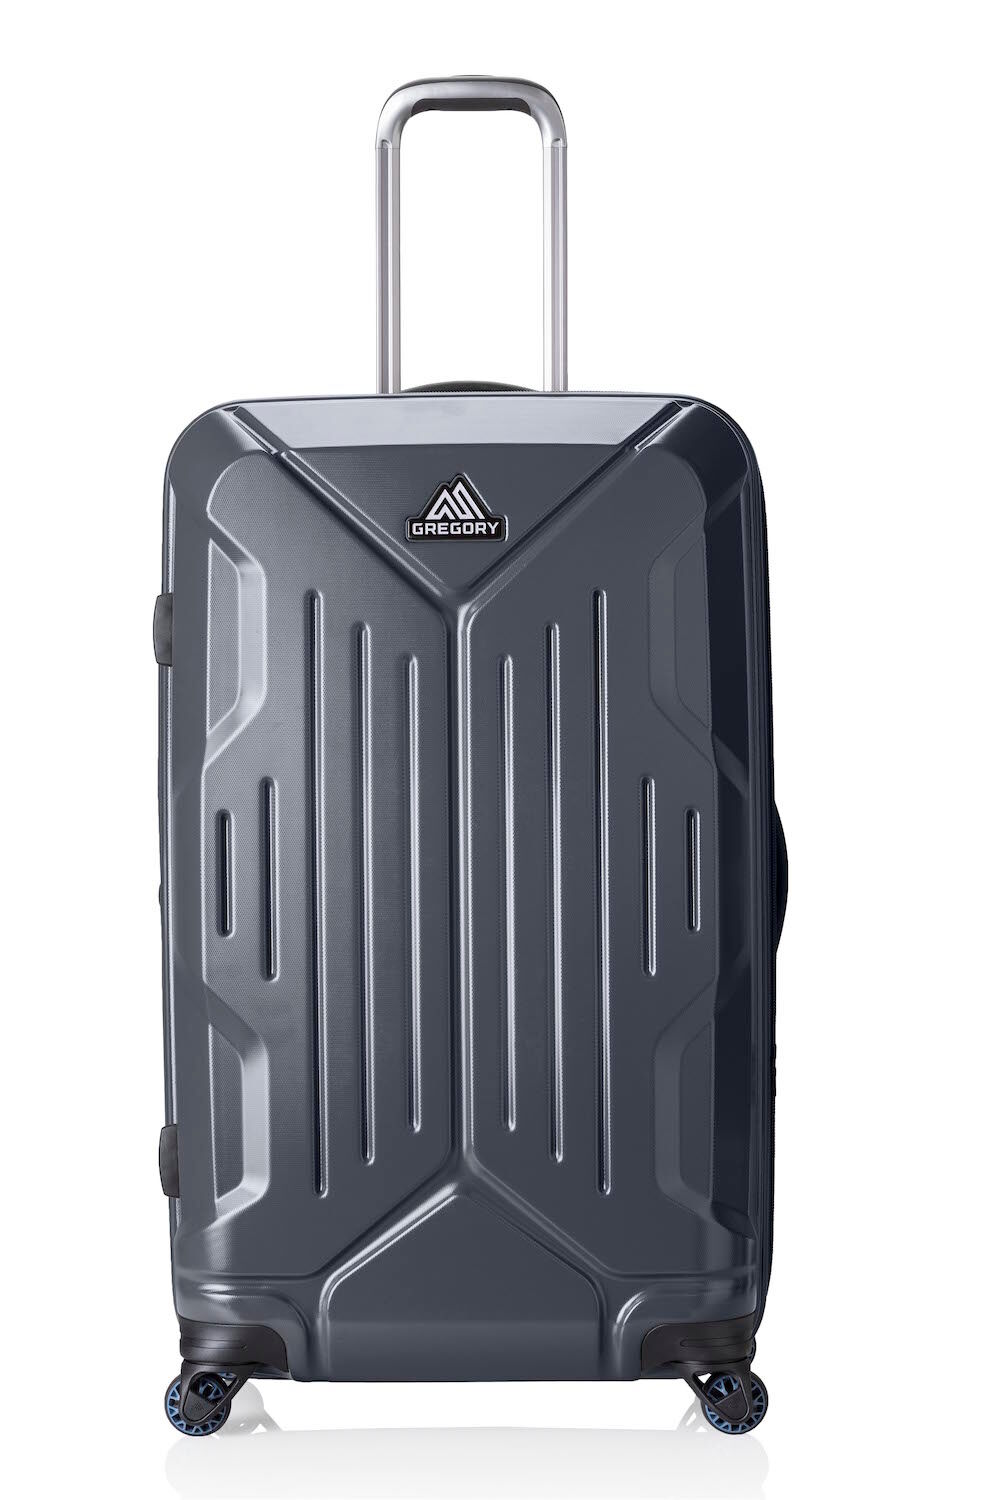 Gregory Quadro Hardcase Roller 30 - Luggage